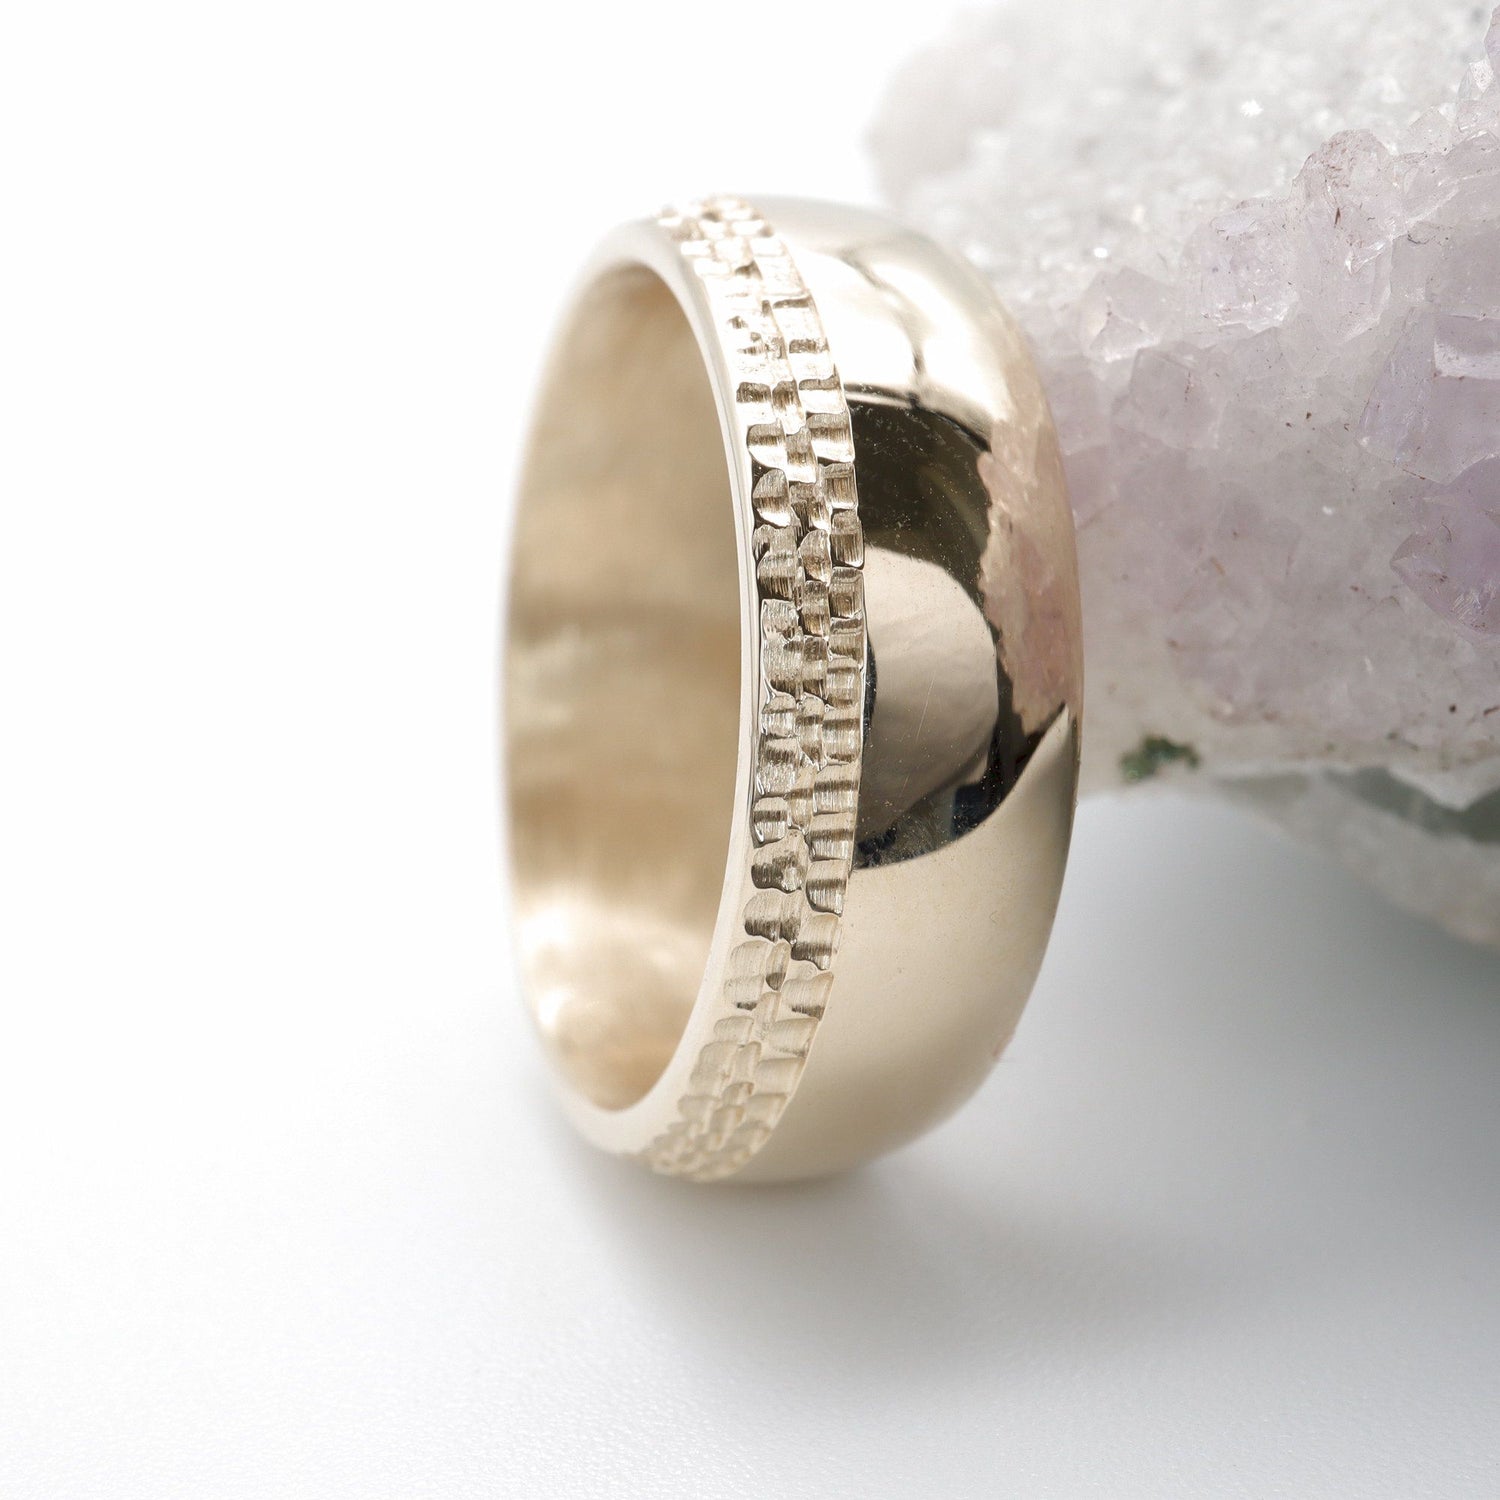 Ullswater wedding ring